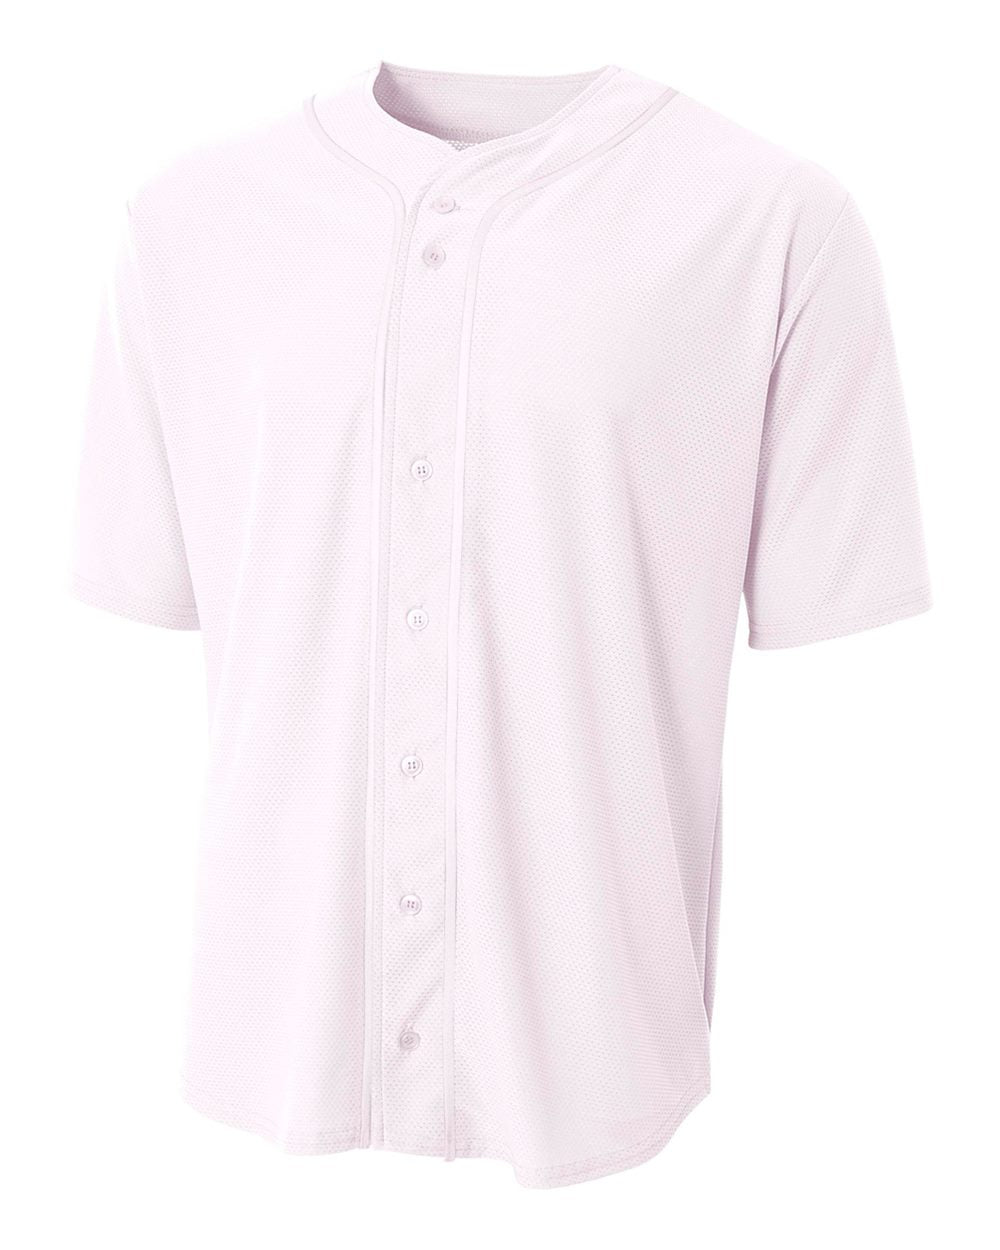 Full Button Baseball Jersey  Short Sleeve Button Down Shirts